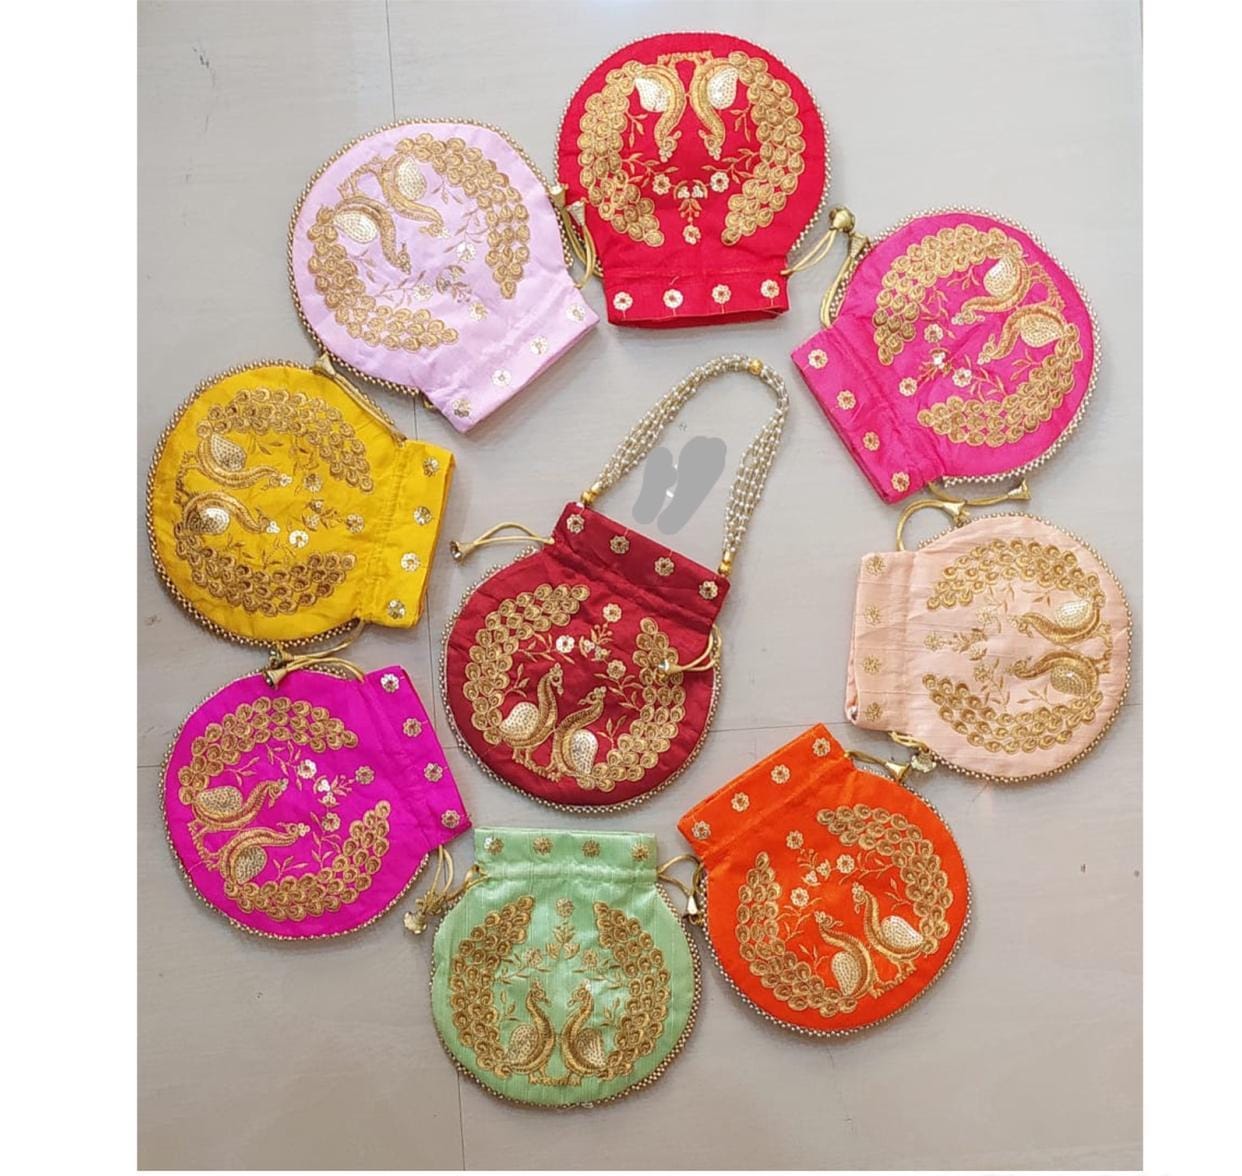 LAMANSH ® Women's Potli Bag Pack of 20 LAMANSH® 20 pcs (8×9 inch) Fabric Peacock Embroidered Potli Bags / Potli hand bags for Gifting 🎁 & Favours